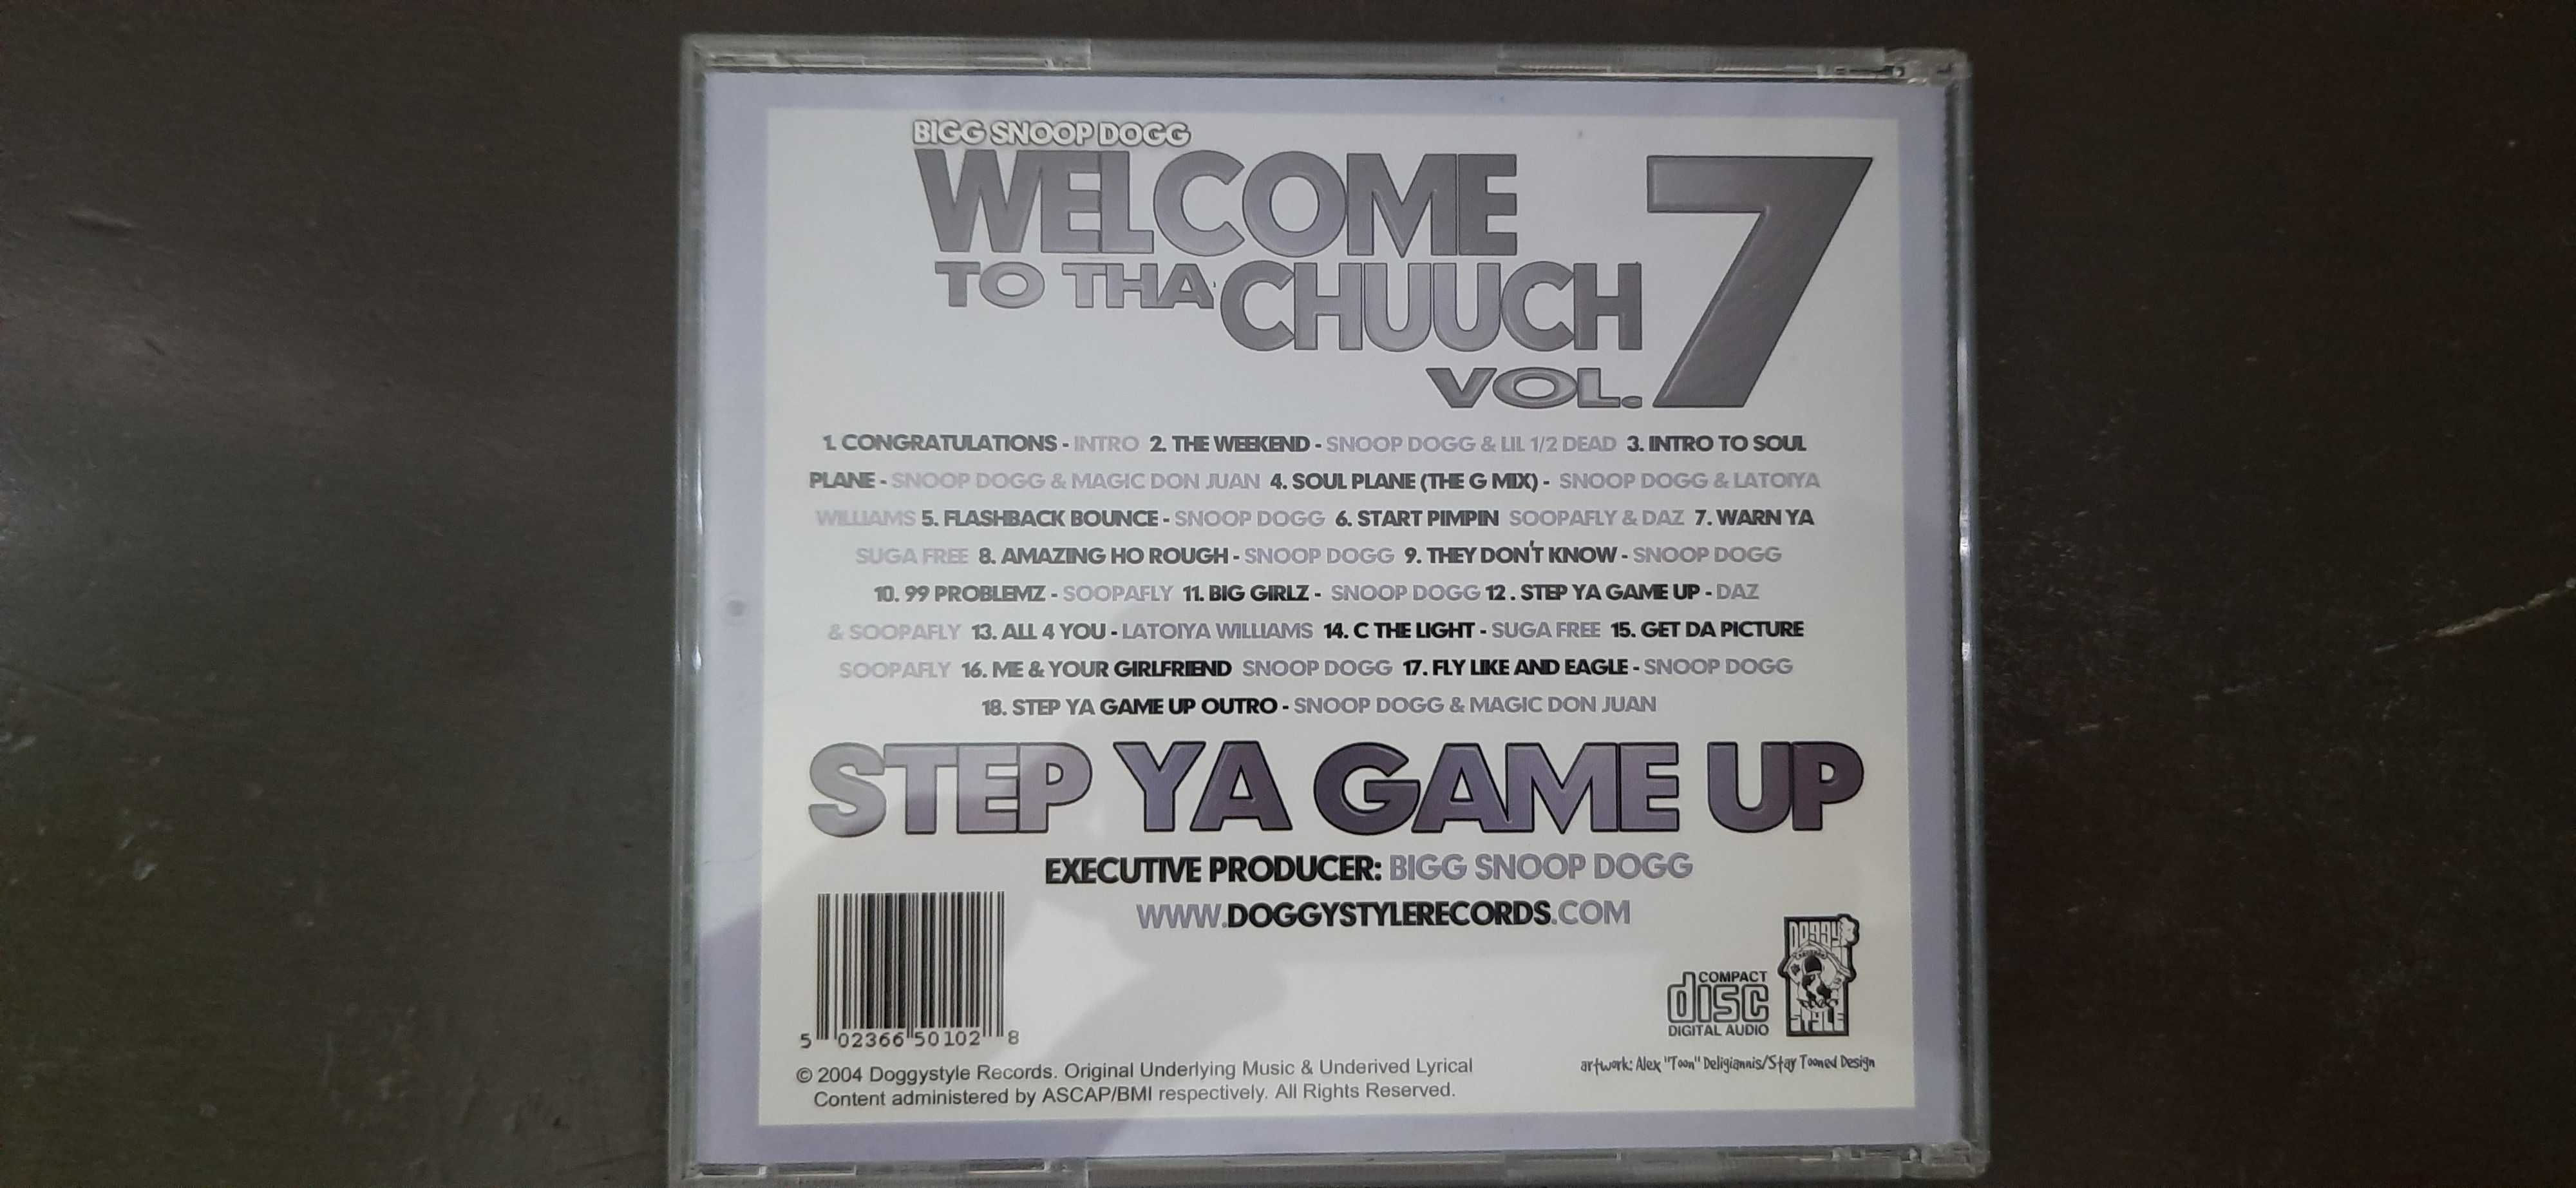 Bigg Snoop Dogg* - Welcome To Tha Chuuch Vol. 7 (Step Ya Game Up)
CD